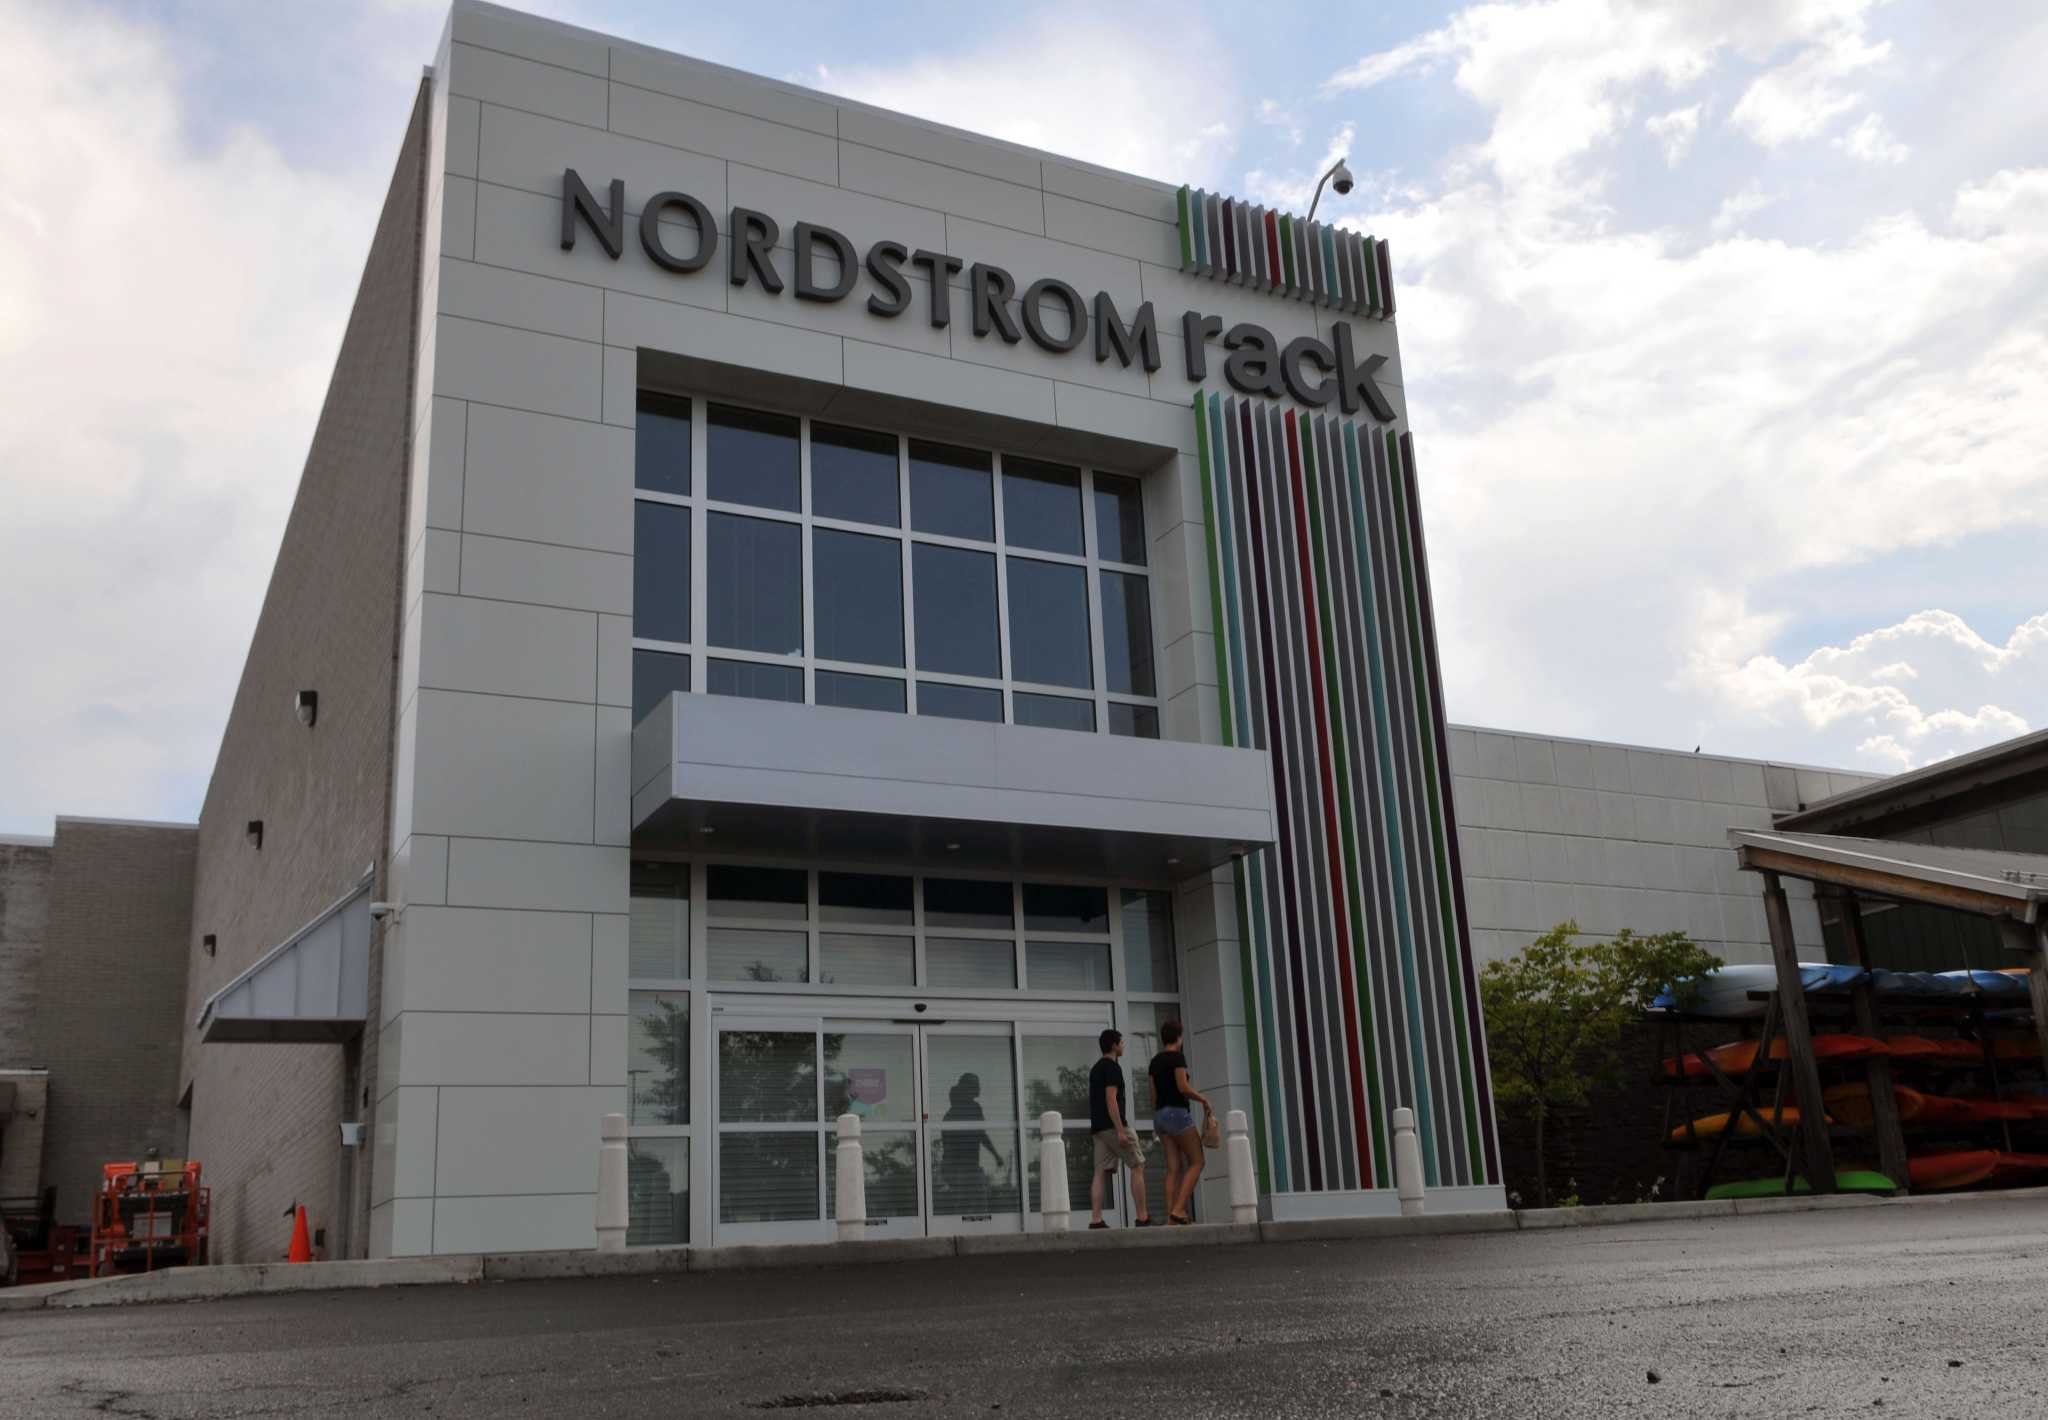 Nordstrom Rack to open at Plaza El Segundo in 2019 – Daily Breeze